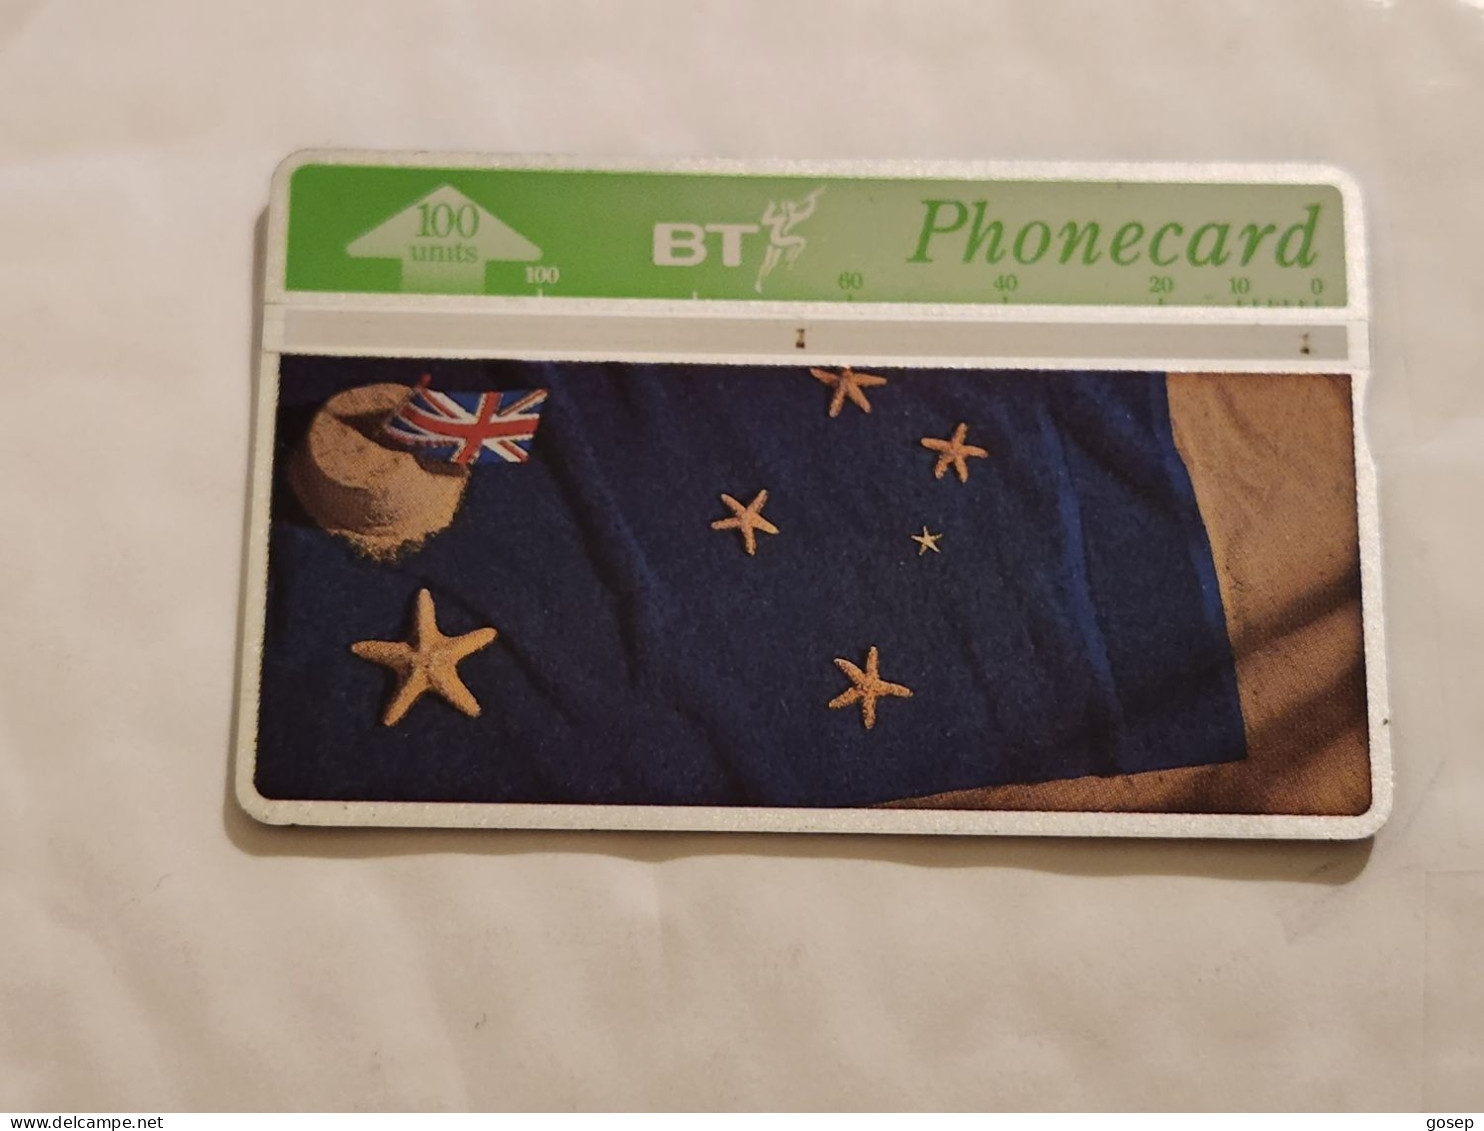 United Kingdom(BTC158)Flying The Flag 4(AUSTRALIA)(1045)(100units)(526H33634)price Cataloge6.00£+1card Prepiad Free - BT Edición Conmemorativa